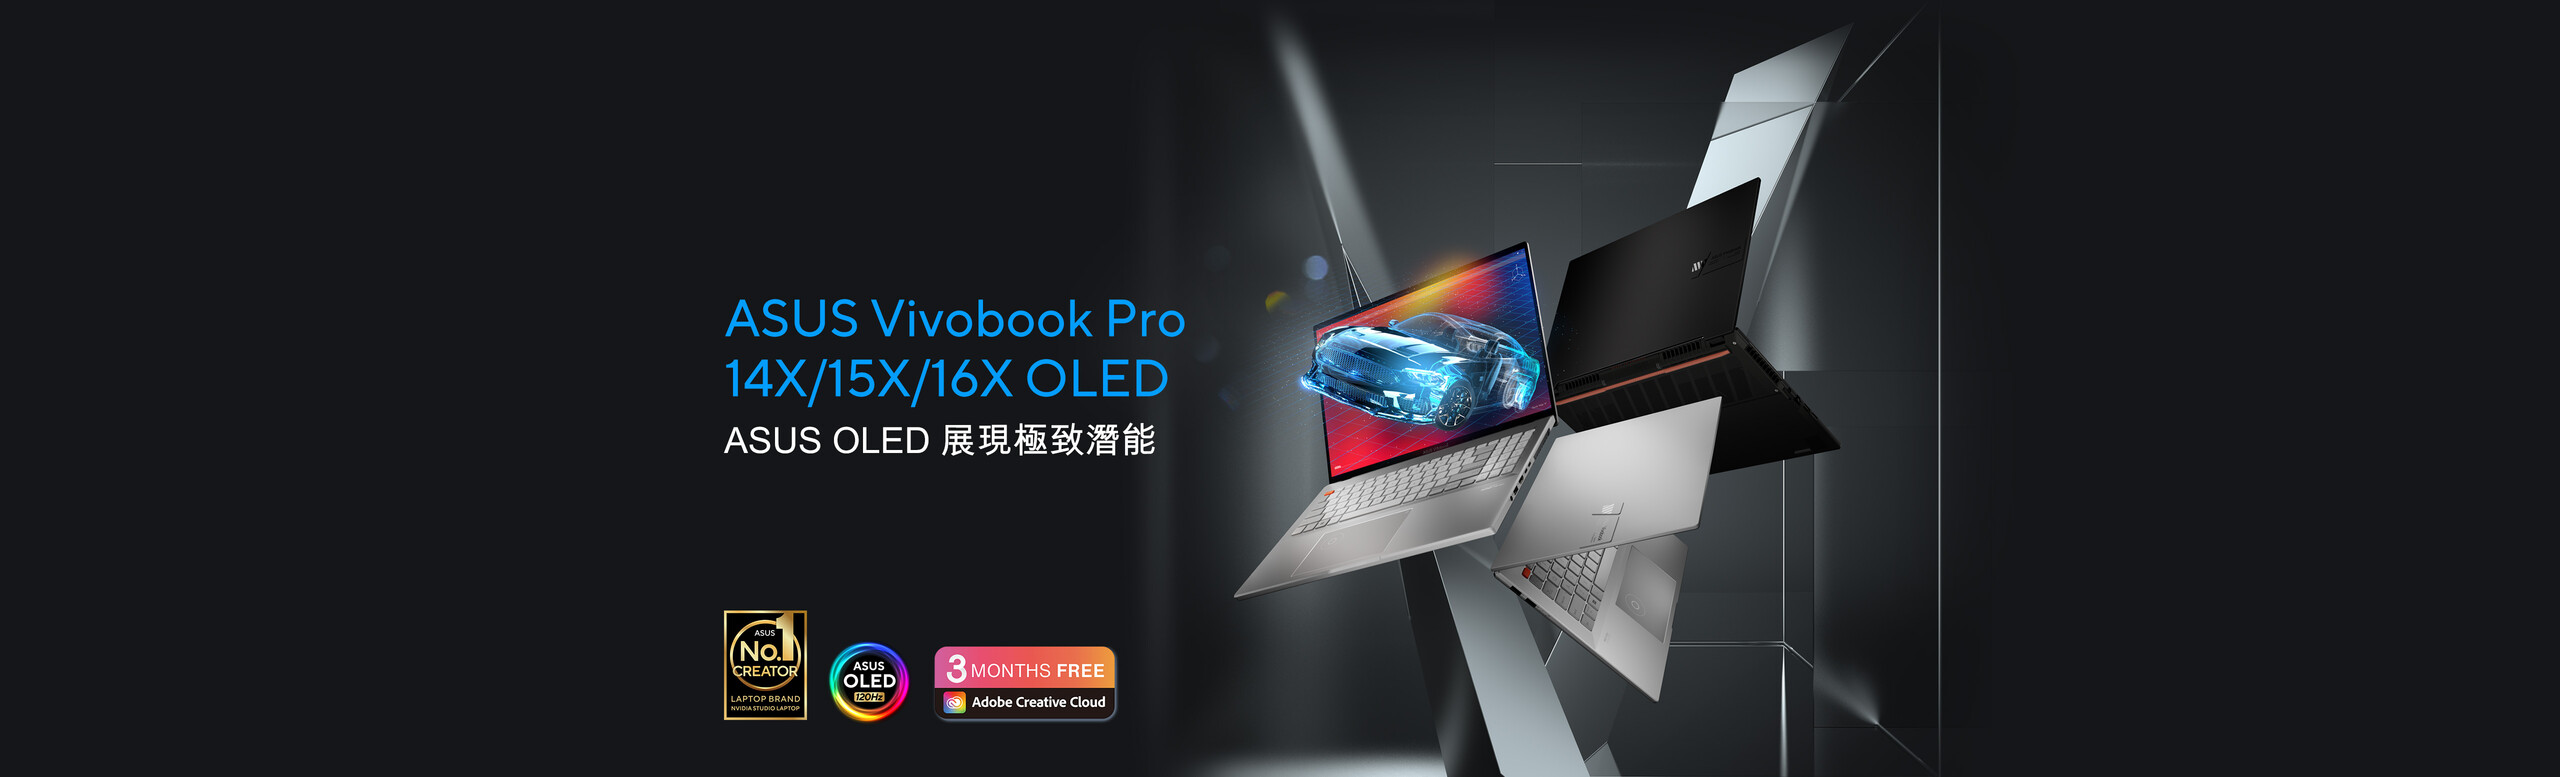 Vivobook Pro 14X OLED (N7401, 12th Gen Intel) | 手提電腦| ASUS HK 